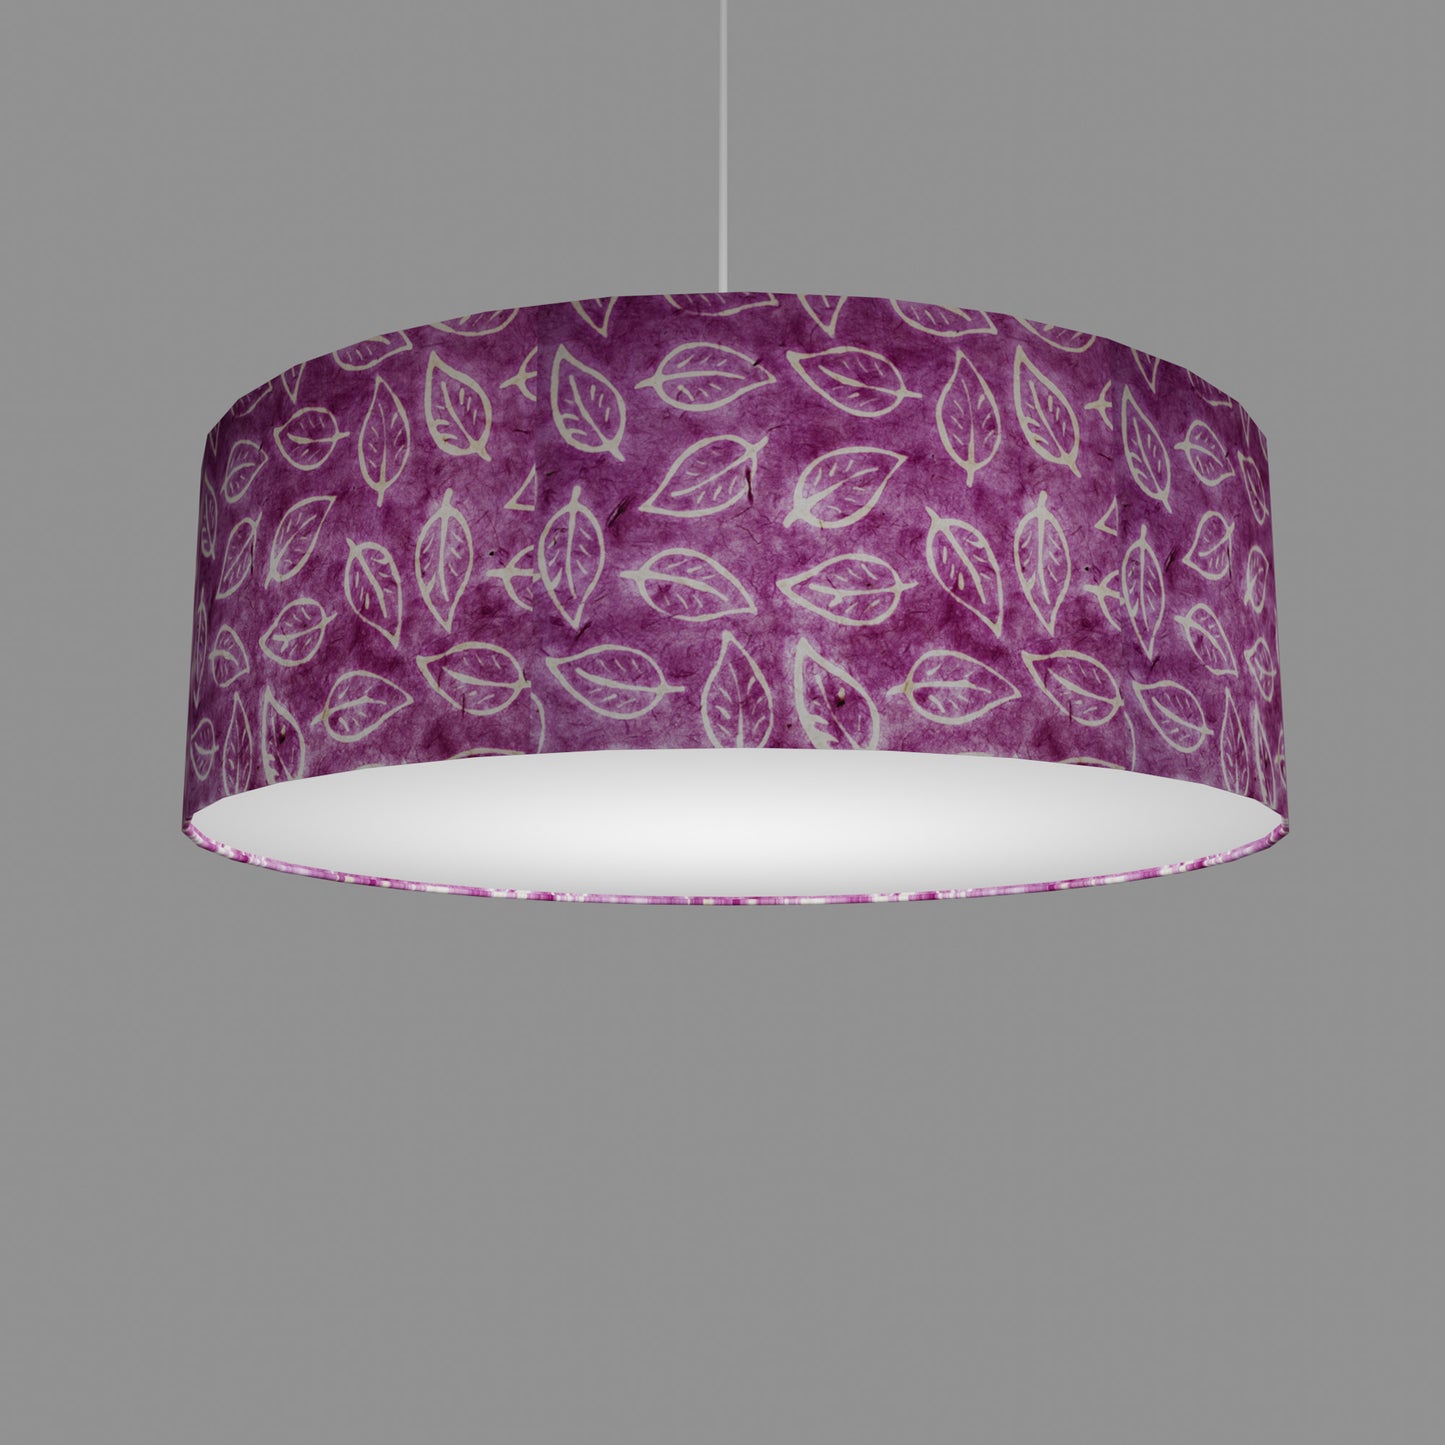 Drum Lamp Shade - P68 - Batik Leaf on Purple, 60cm(d) x 20cm(h)